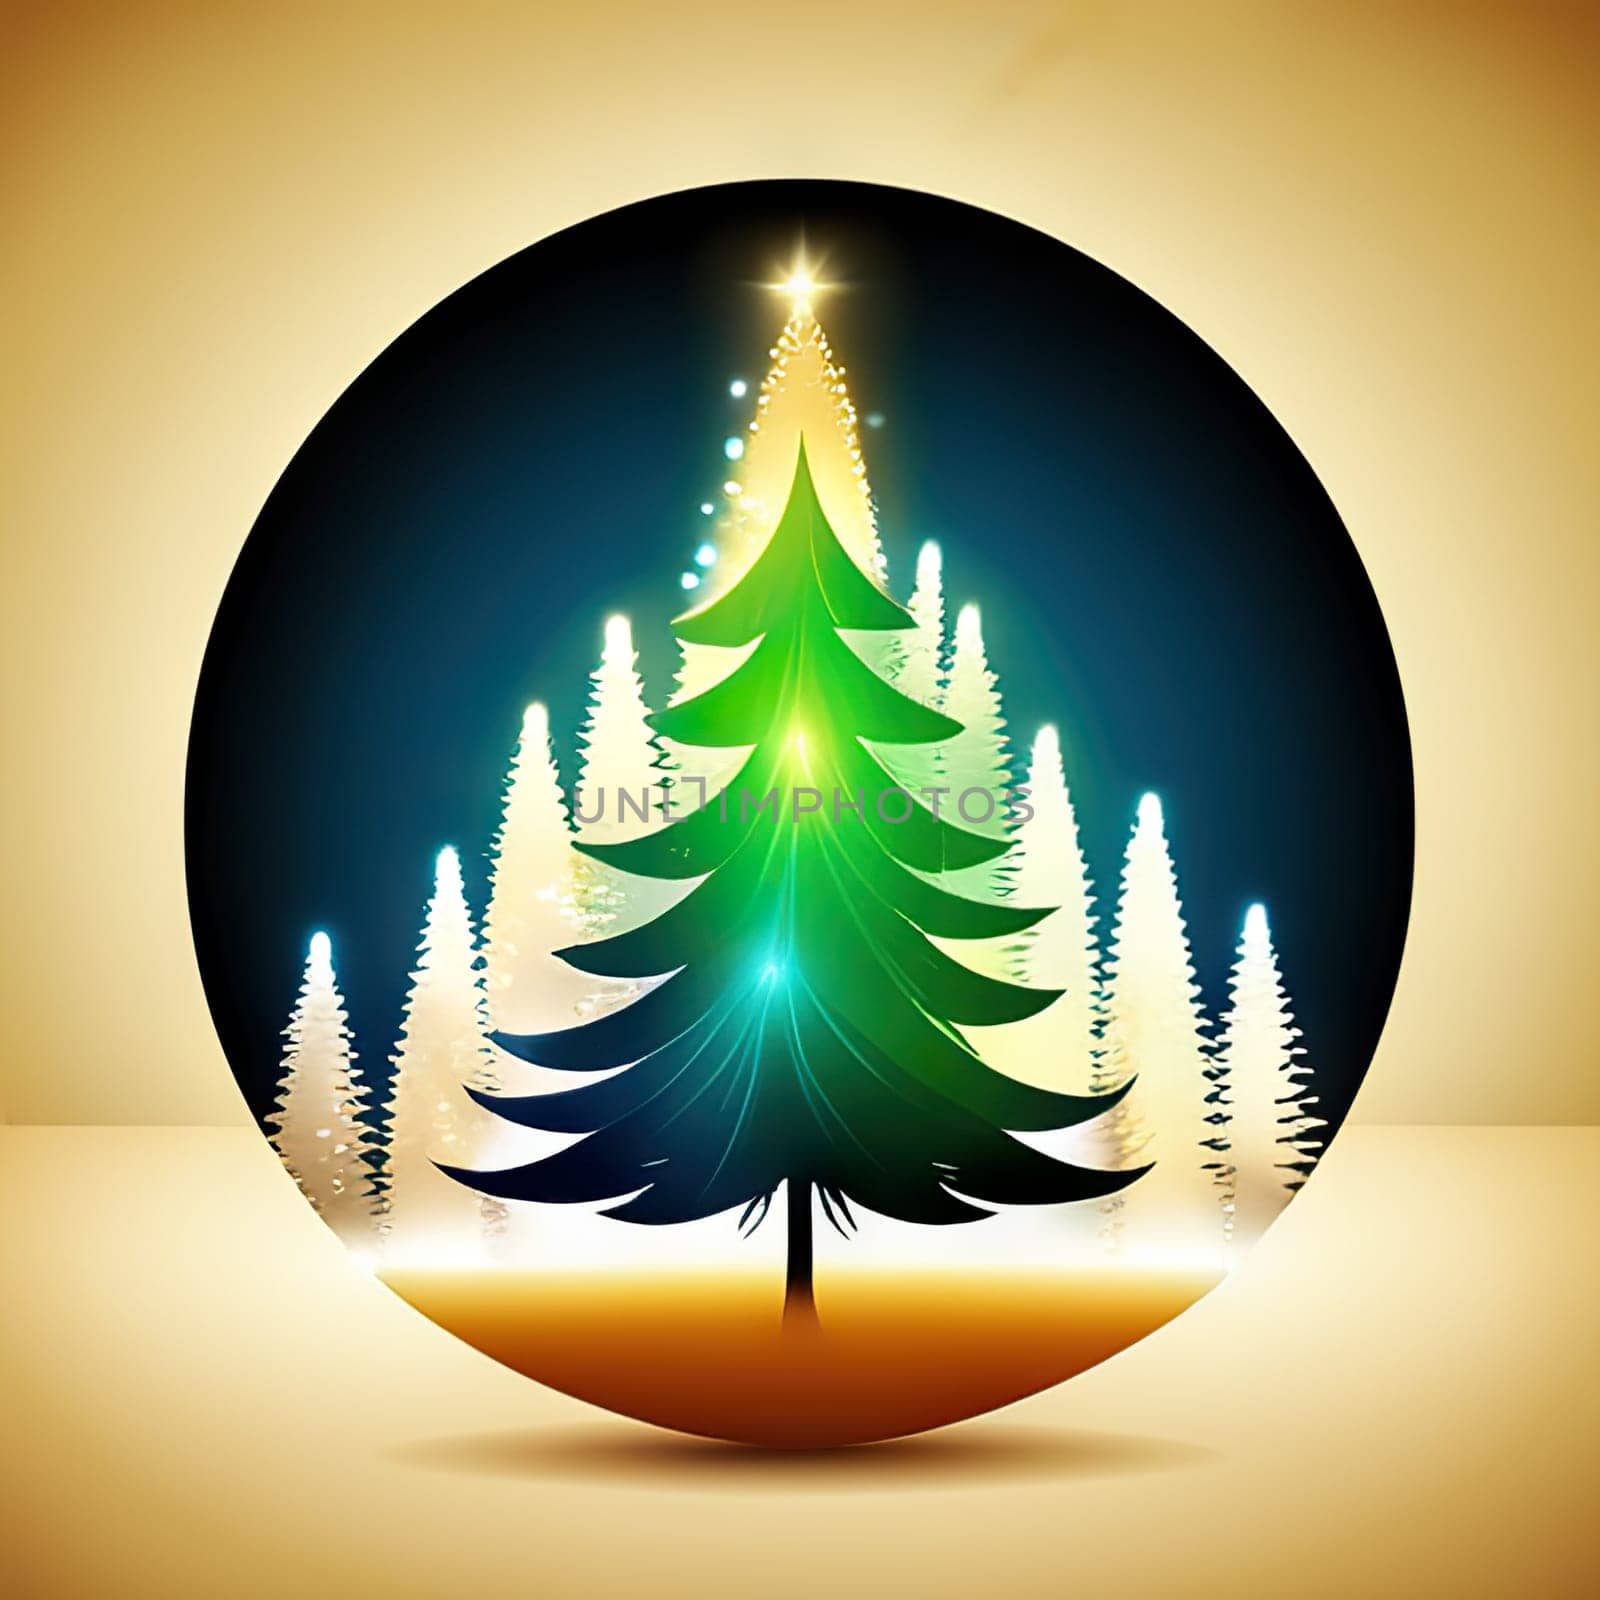 Christmas and New Year illustration with Xmas tree. by EkaterinaPereslavtseva